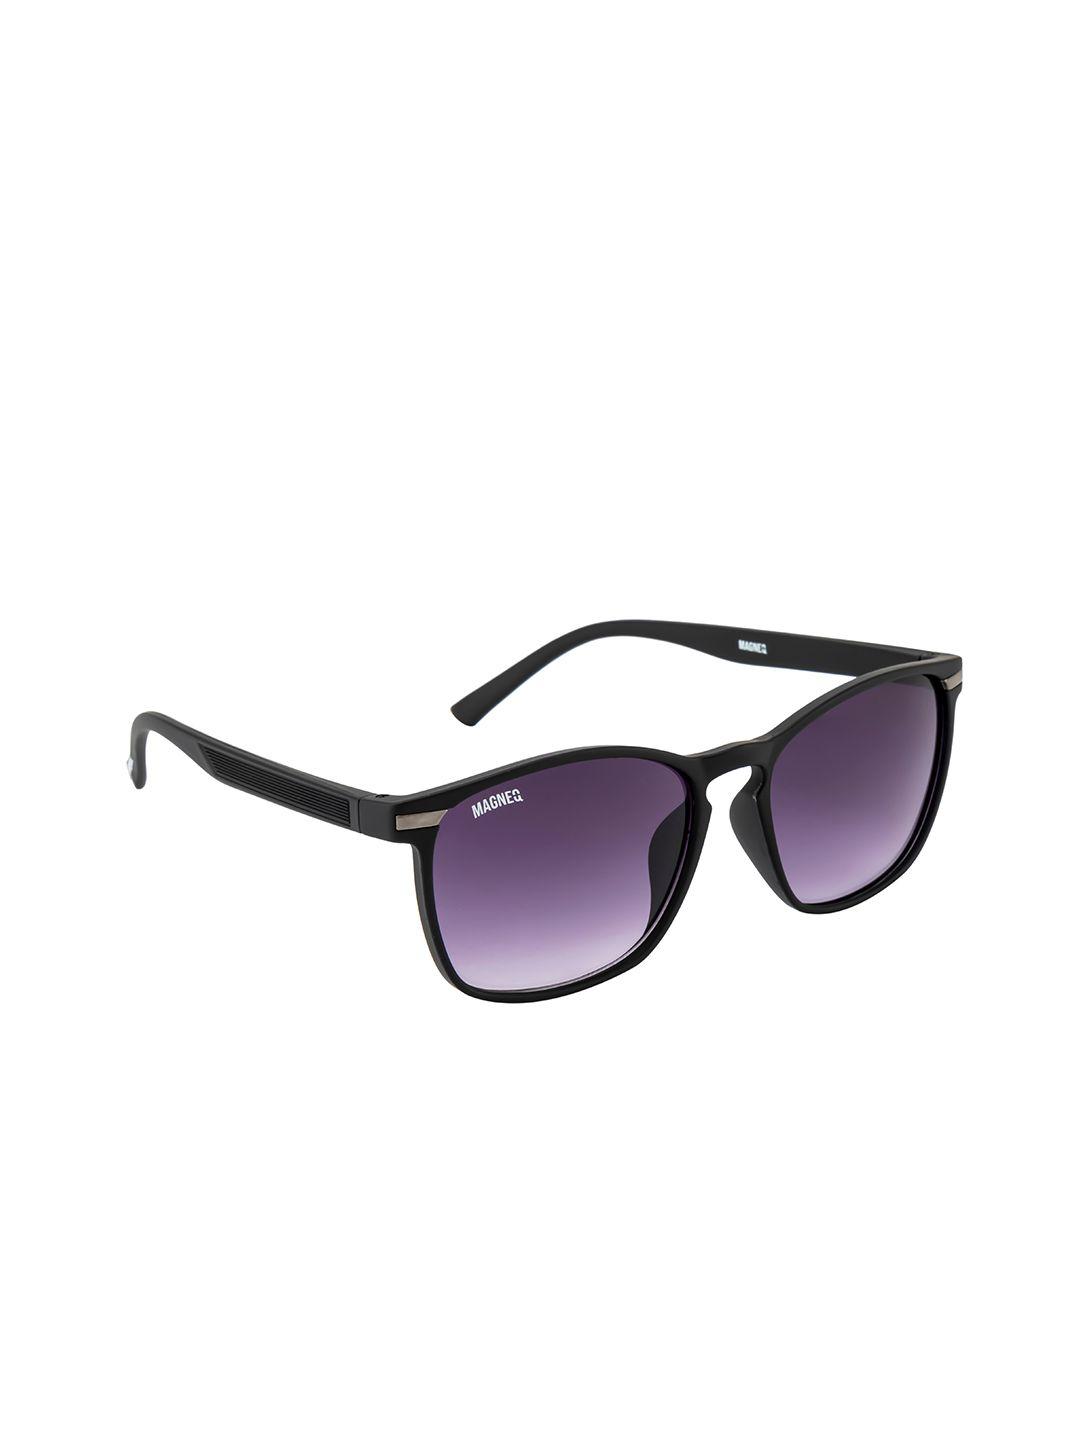 magneq unisex purple lens & black wayfarer sunglasses with polarised and uv protected lens